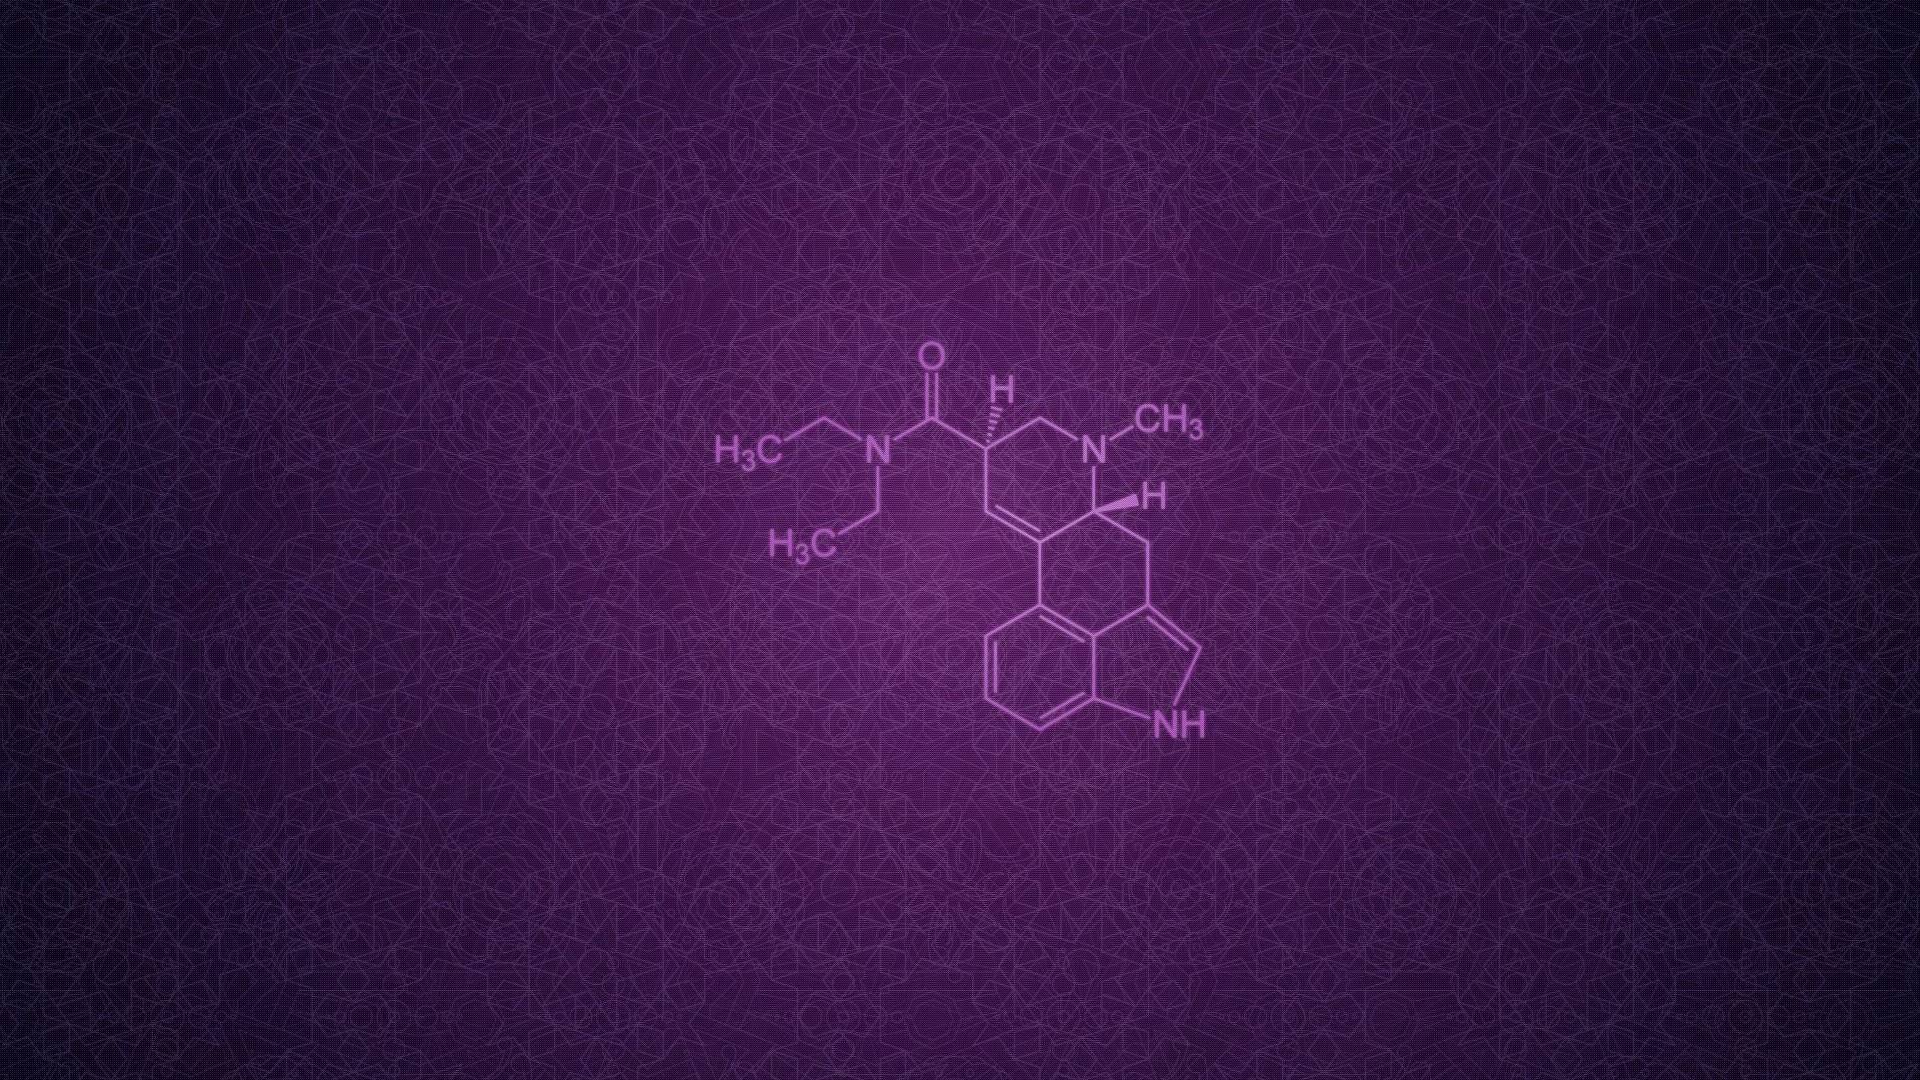 molecule-typography-hd-wallpaper-1920x1080-9815